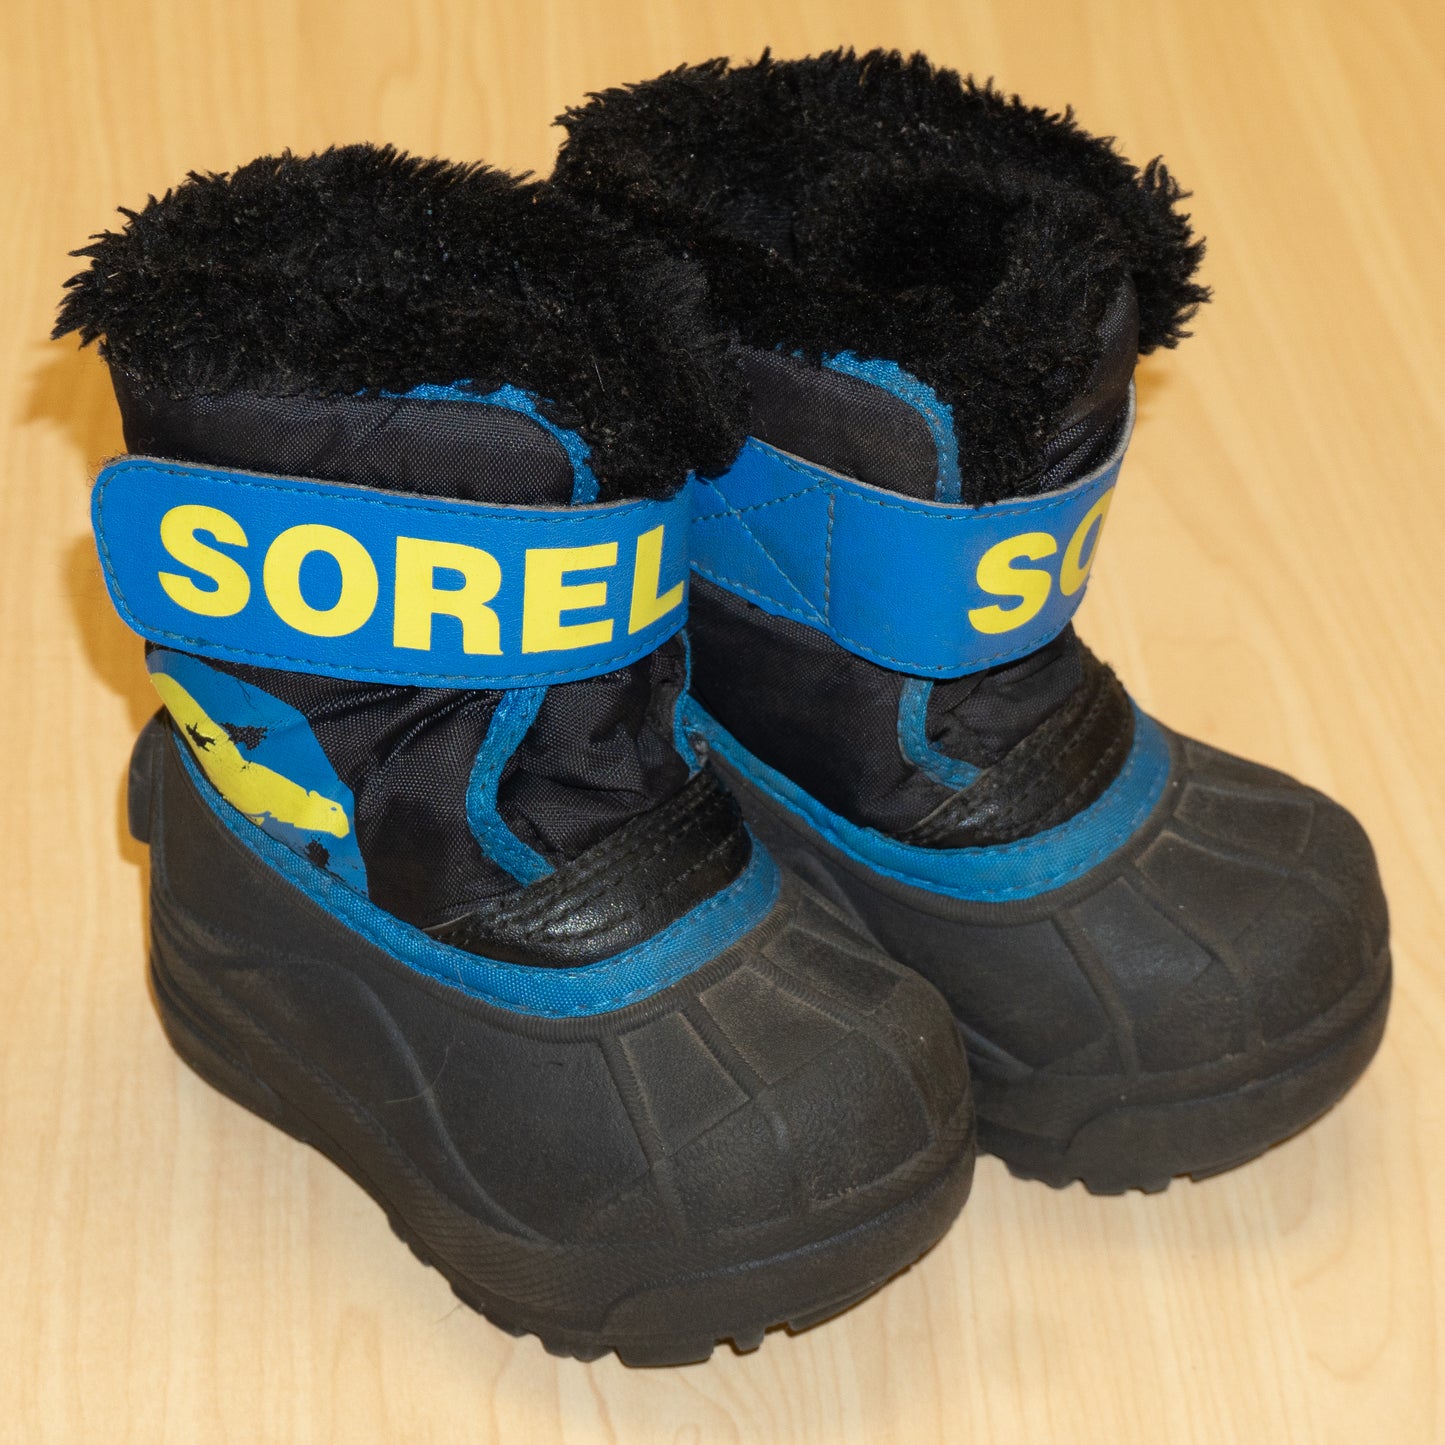 Sorel Boots Size 5